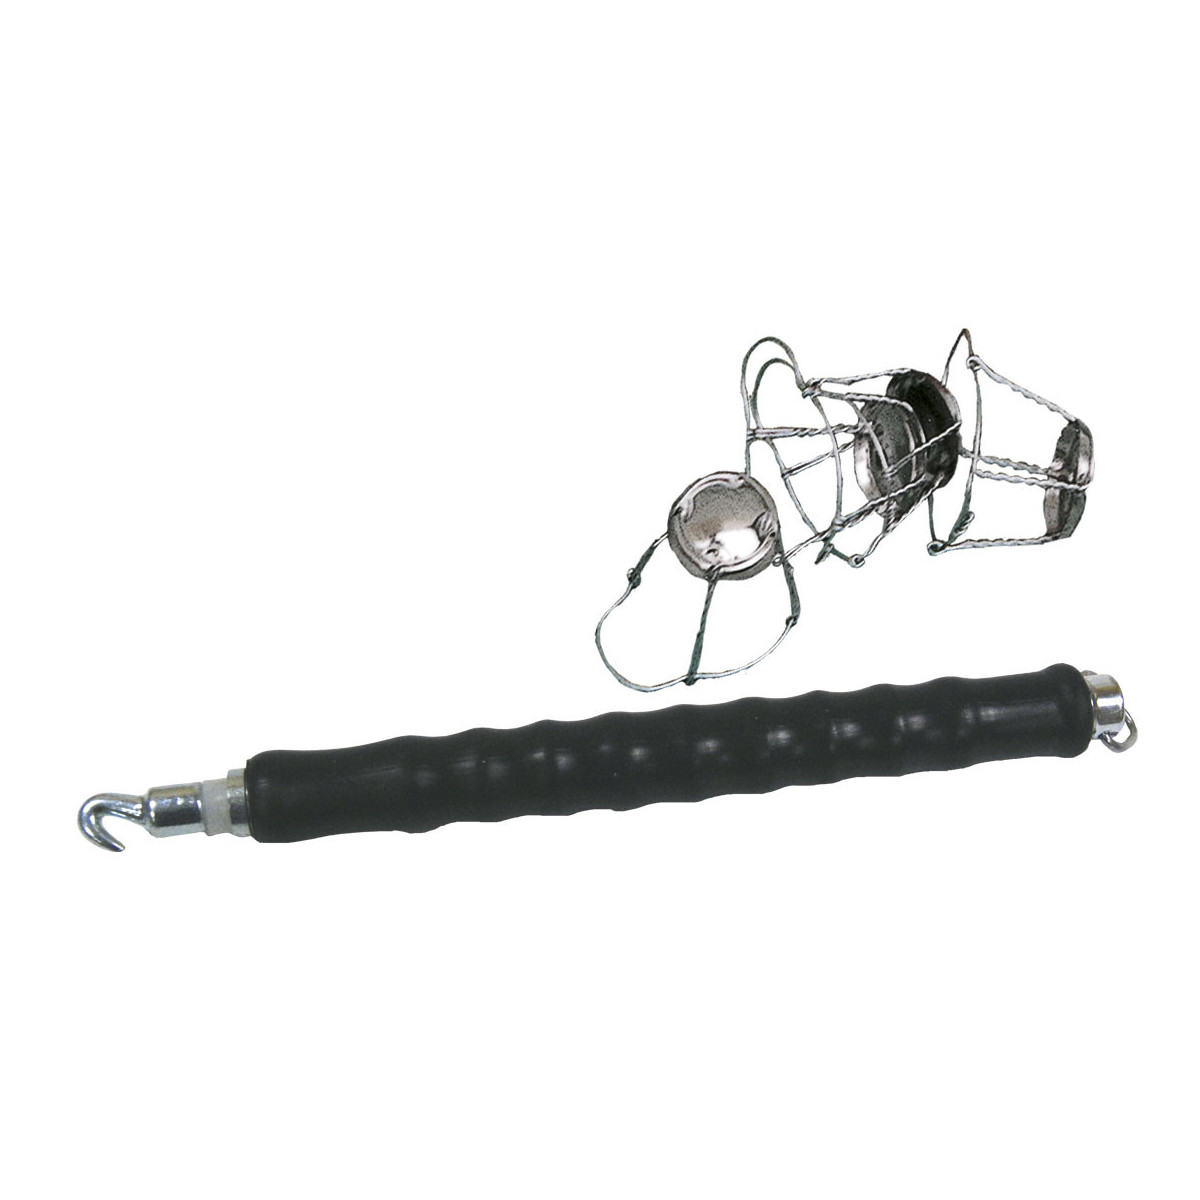 Wire muselet tightener hand-operated, ergonomic handle